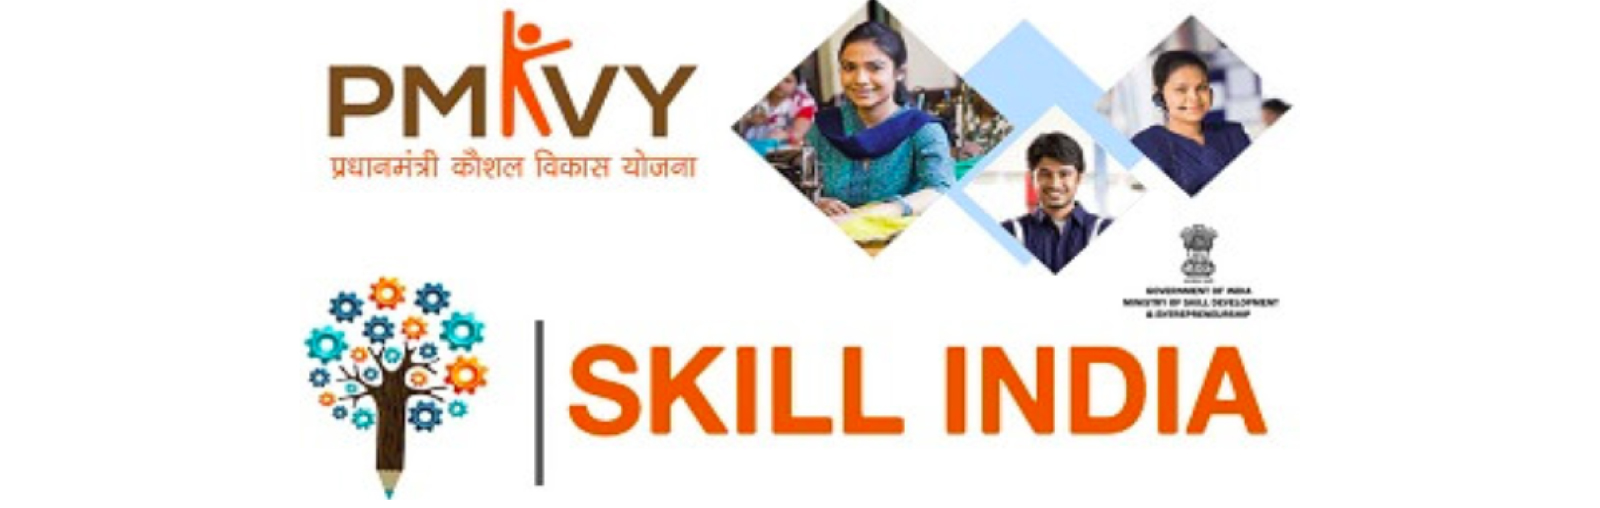 PMKVY Skill India: Need of Skill Development for Youth of India